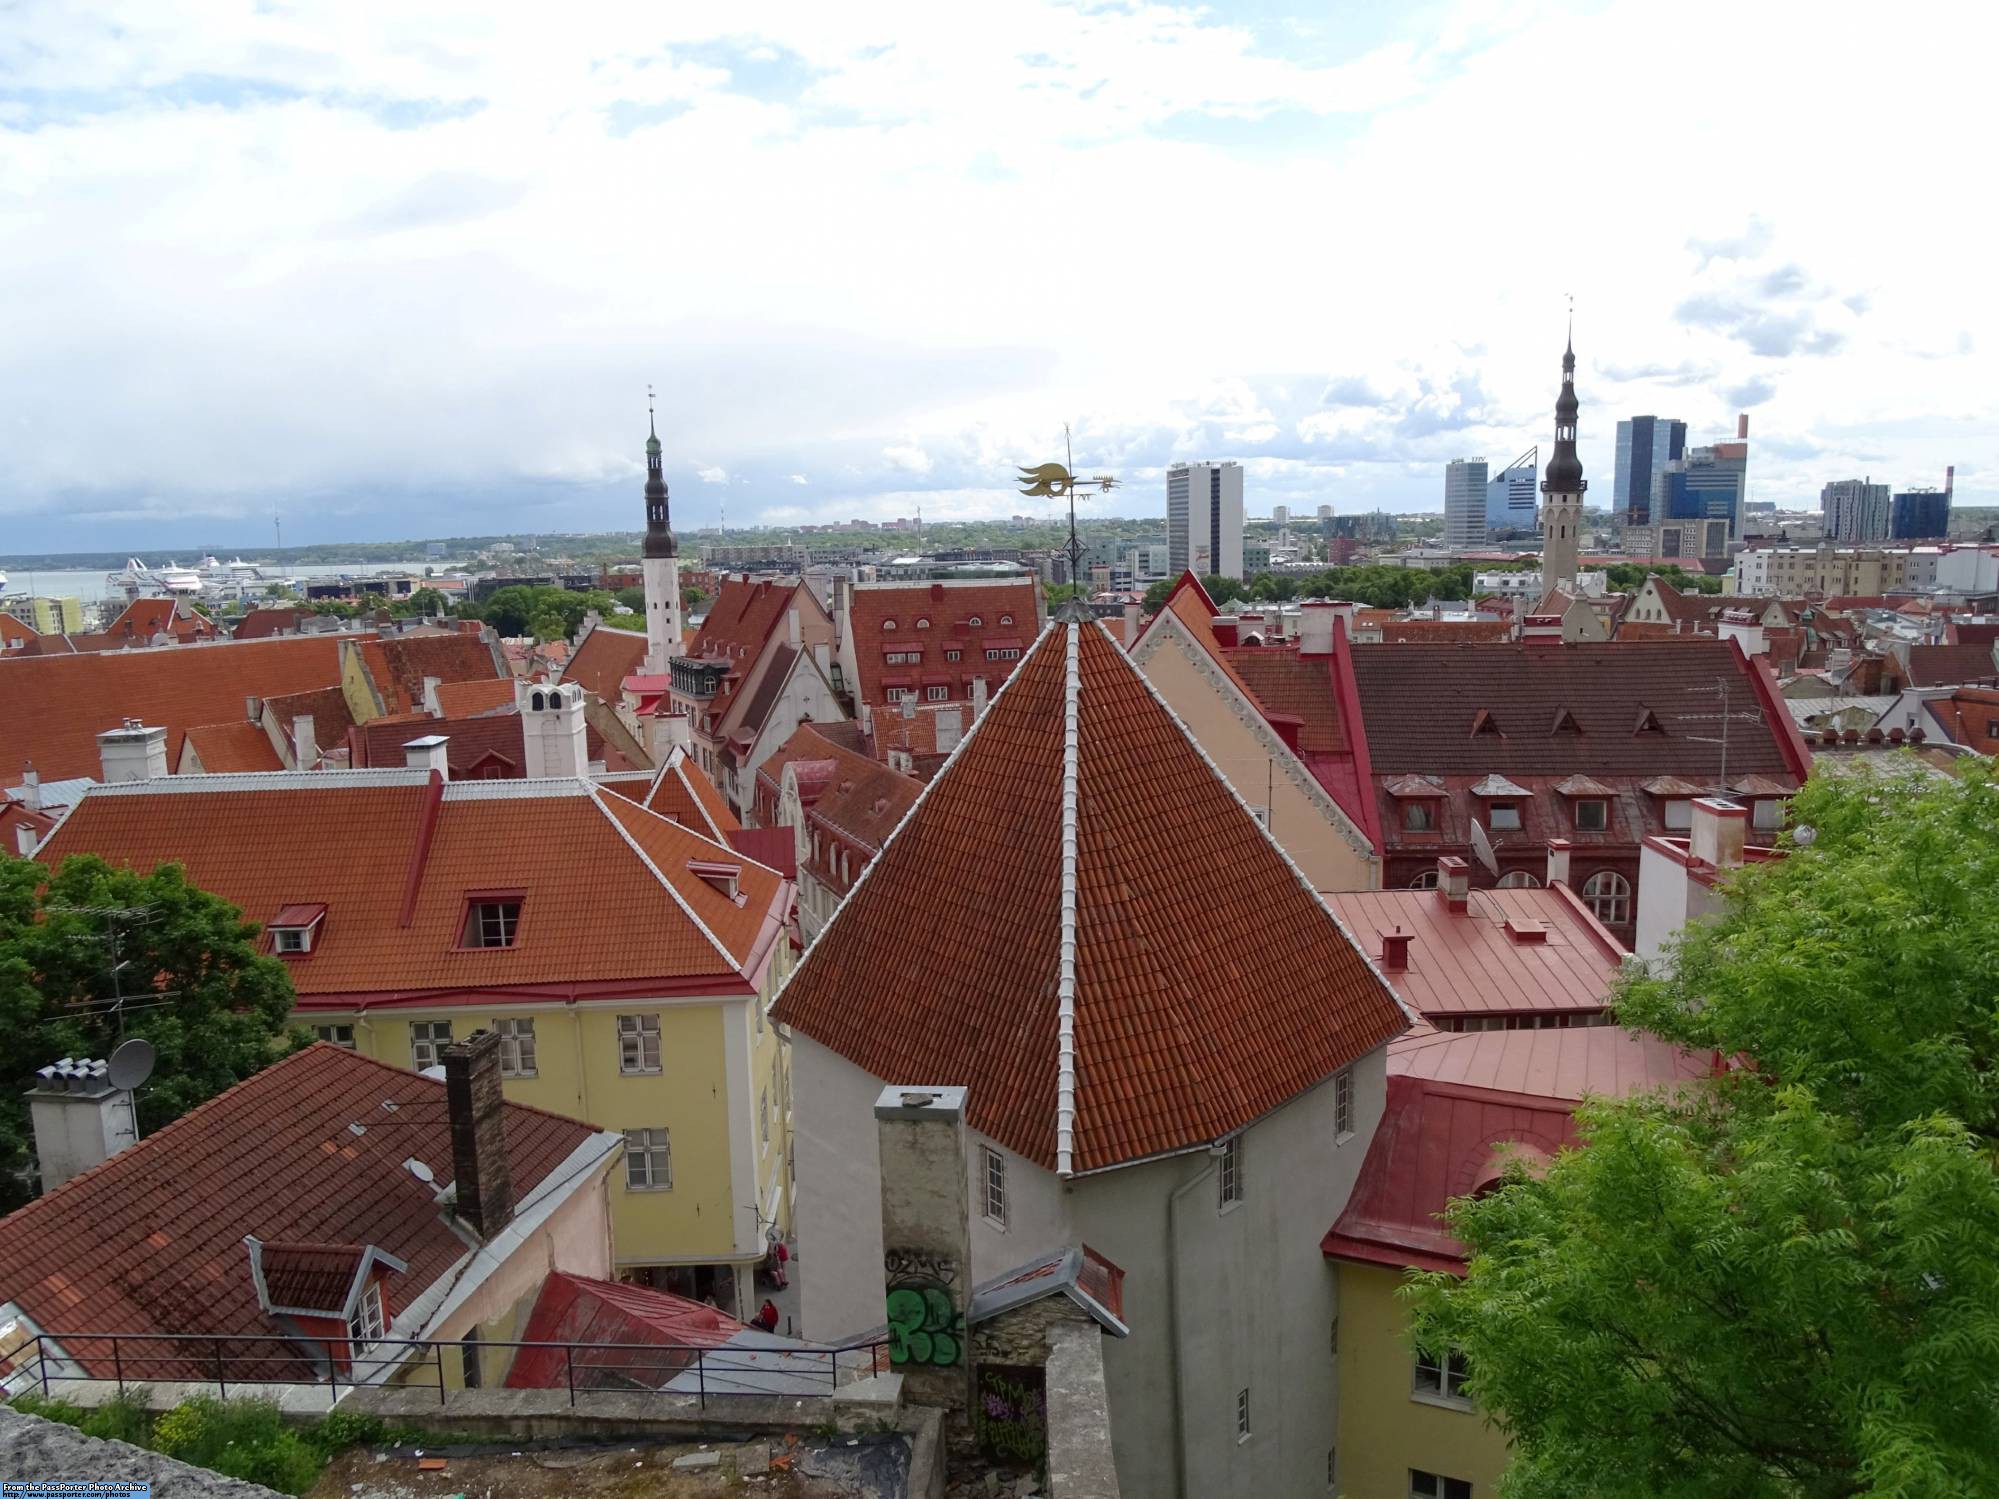 Explore the city of Tallinn, Estonia on your Disney Cruise |PassPorter.com